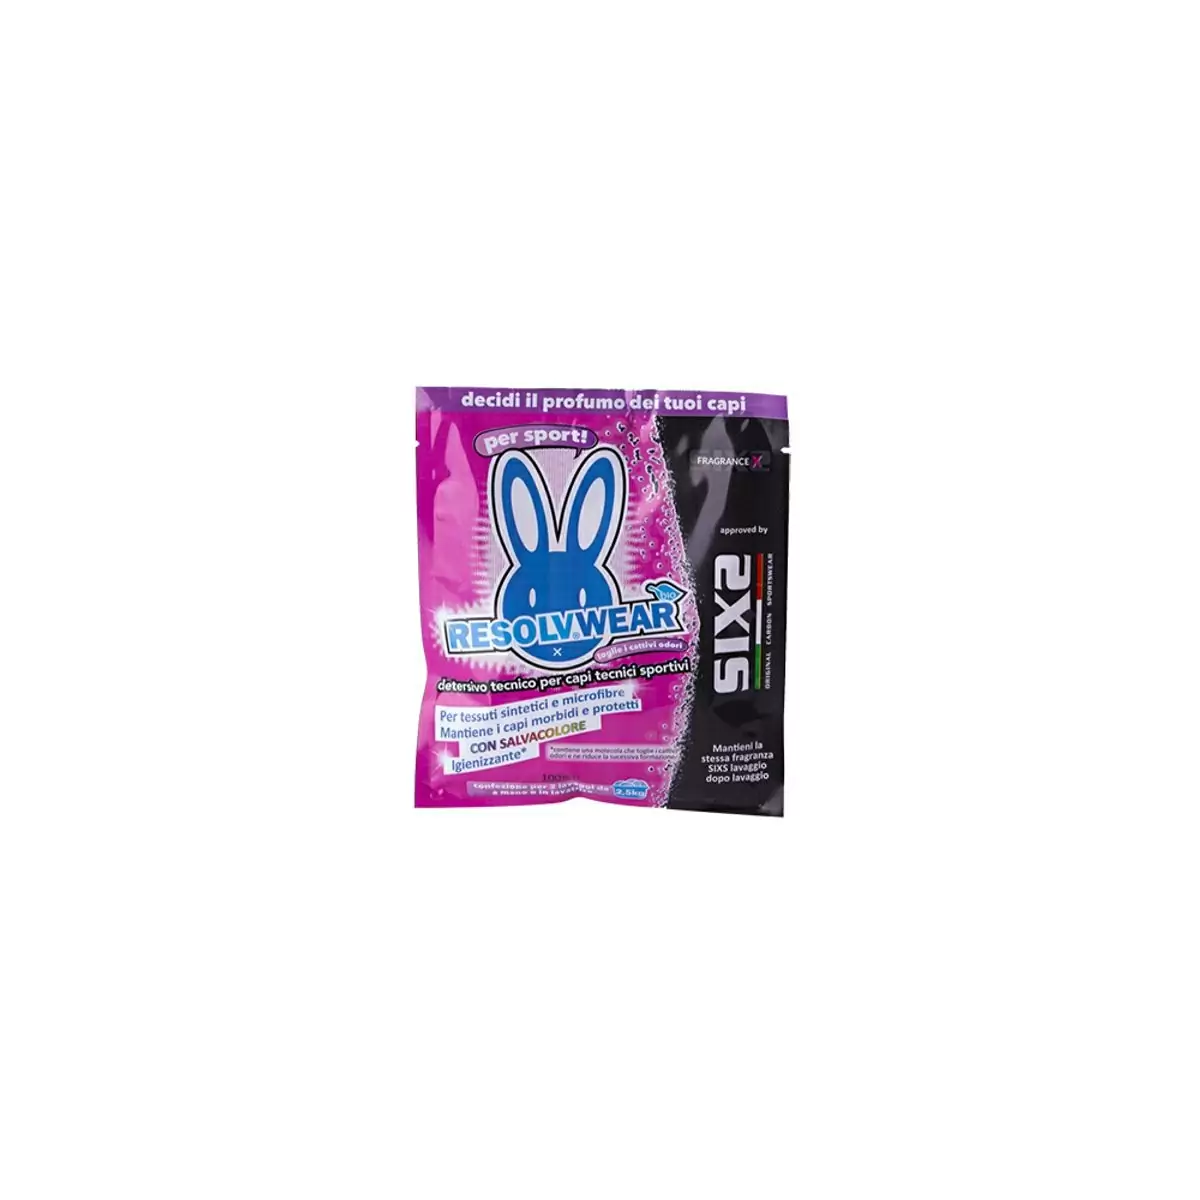 Fragrance X ResolvWear Detergent For Technical Sportswear 100ml - image